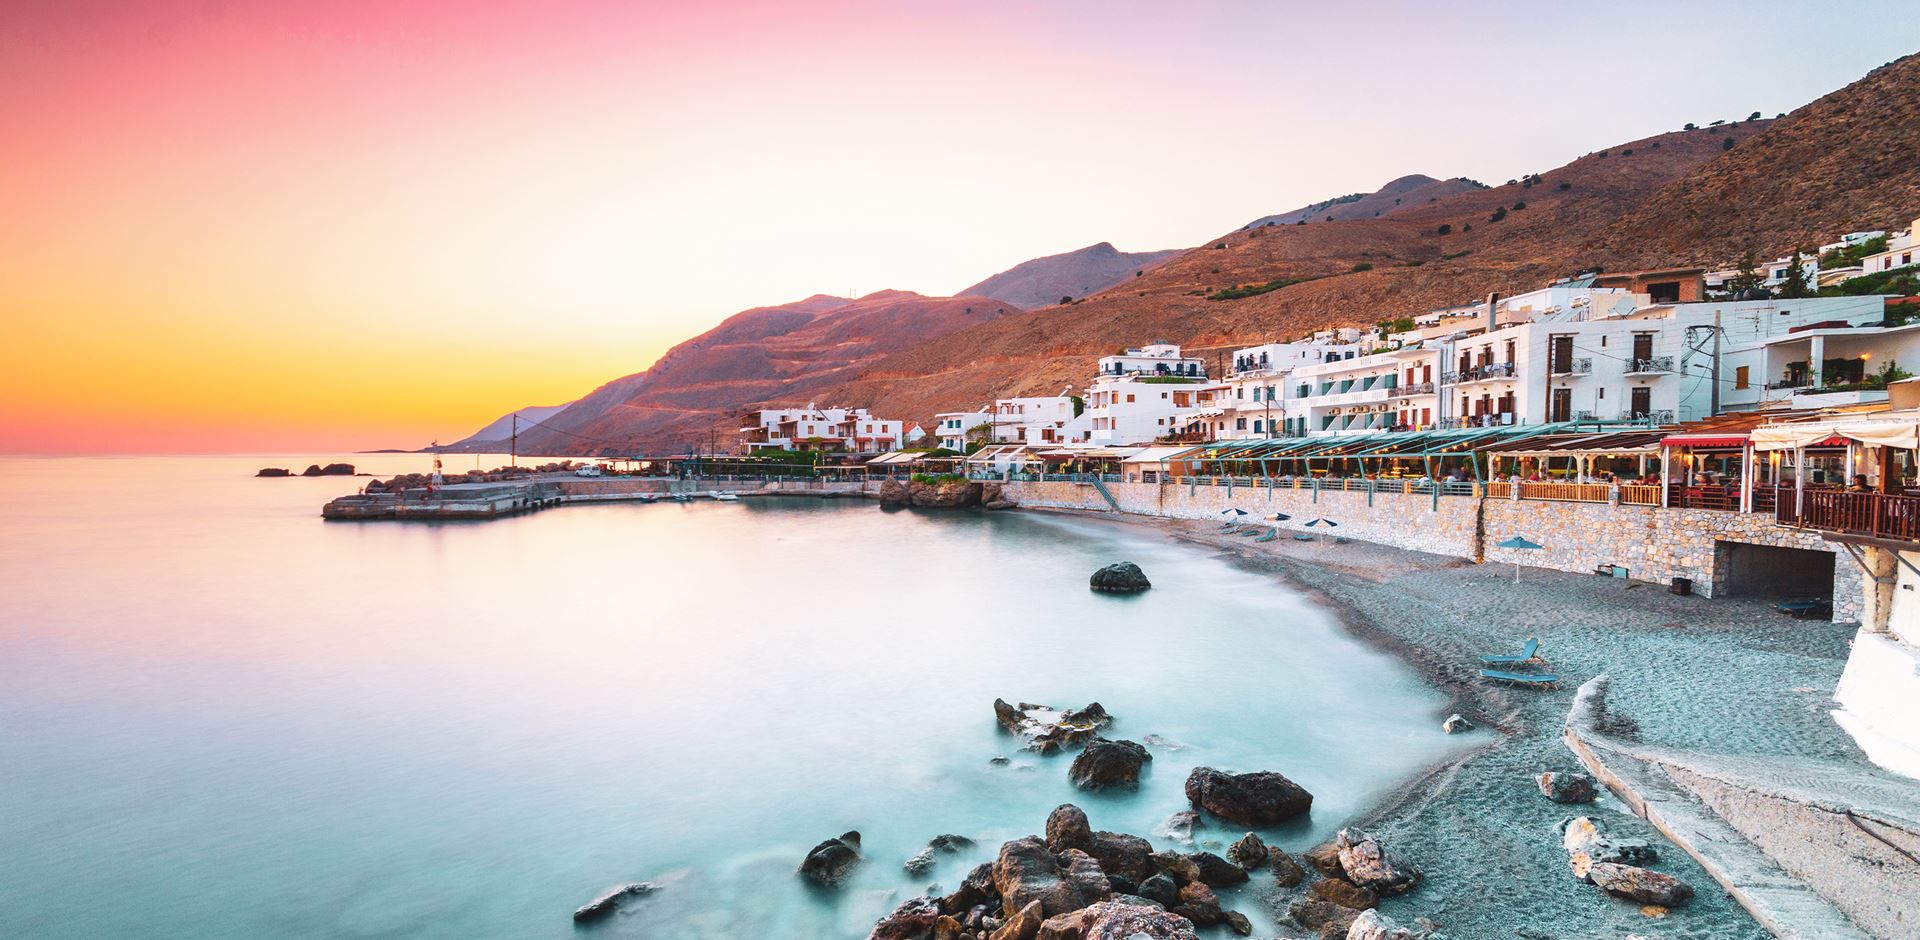 Grækenland Kreta Solnedgang Over Stranden